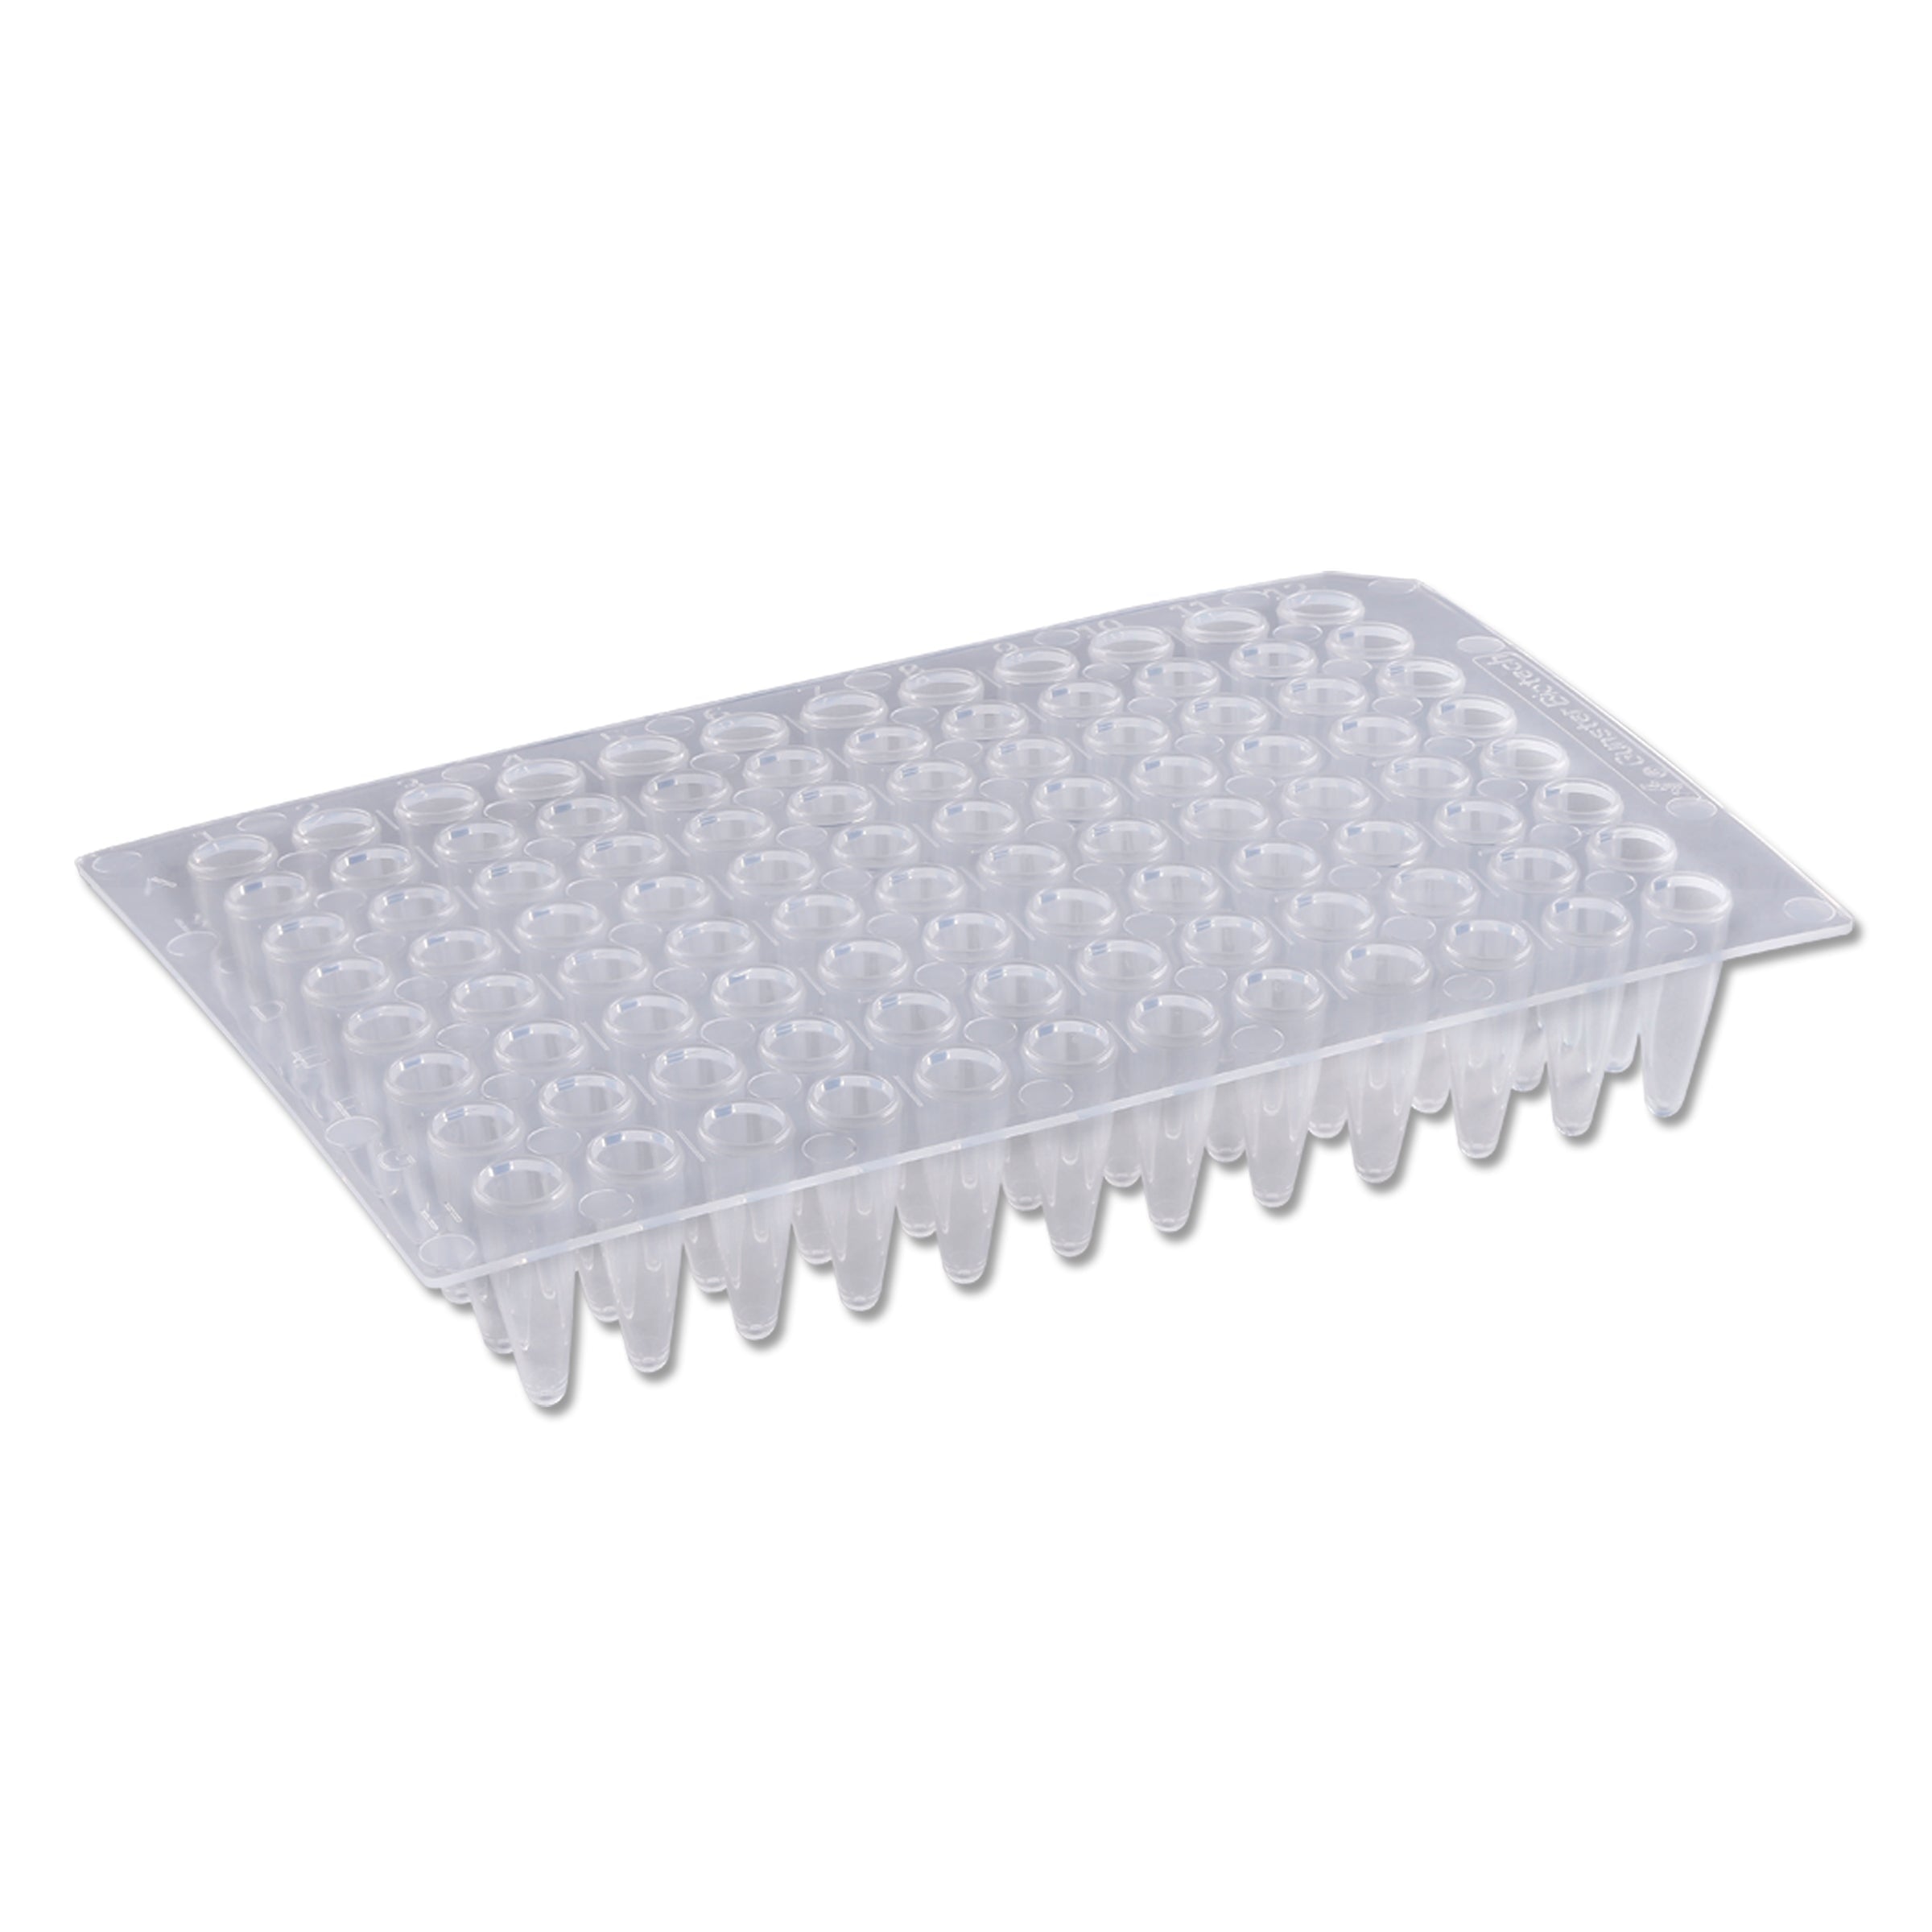 MTC Bio P9602-NW PCR Plates, Standard 96 well x 0.2ml, non-skirted, WHITE, 50/pk